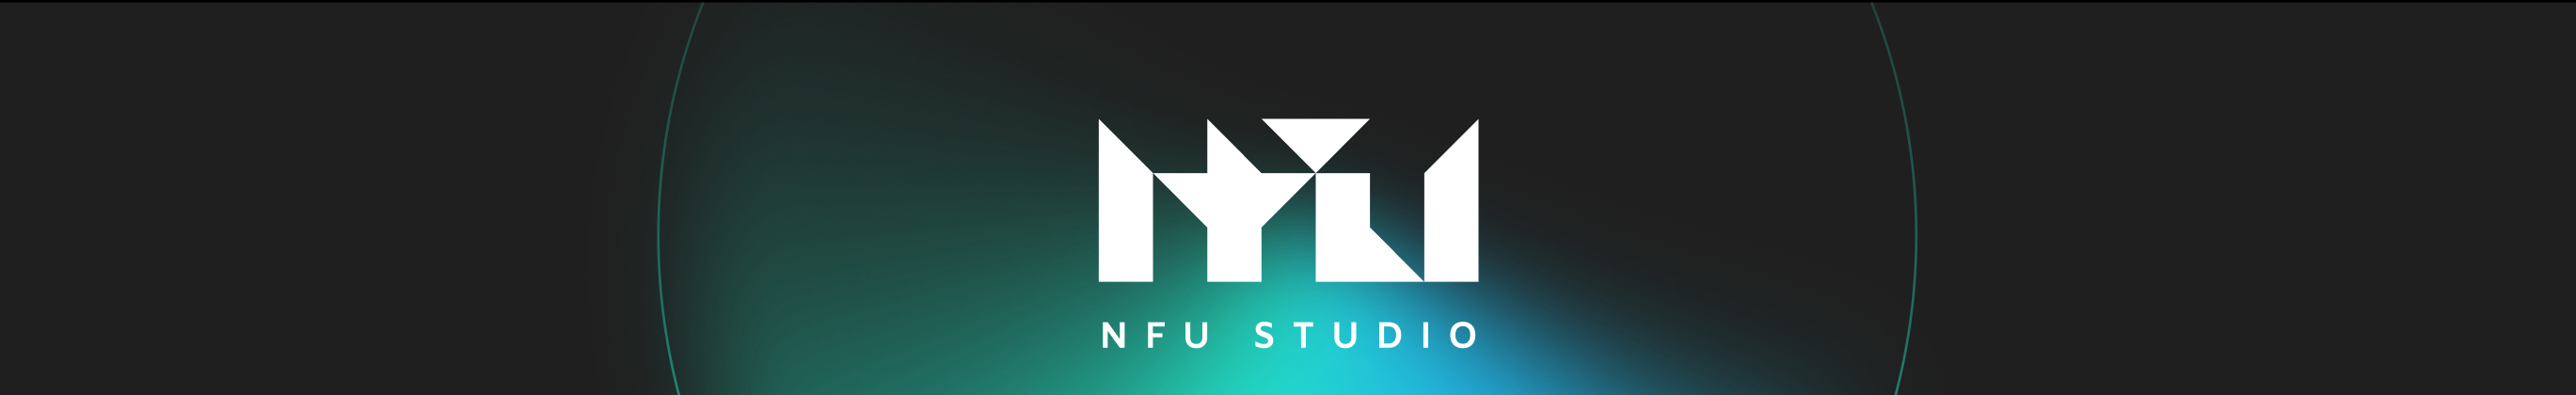 NFU Studio's profile banner